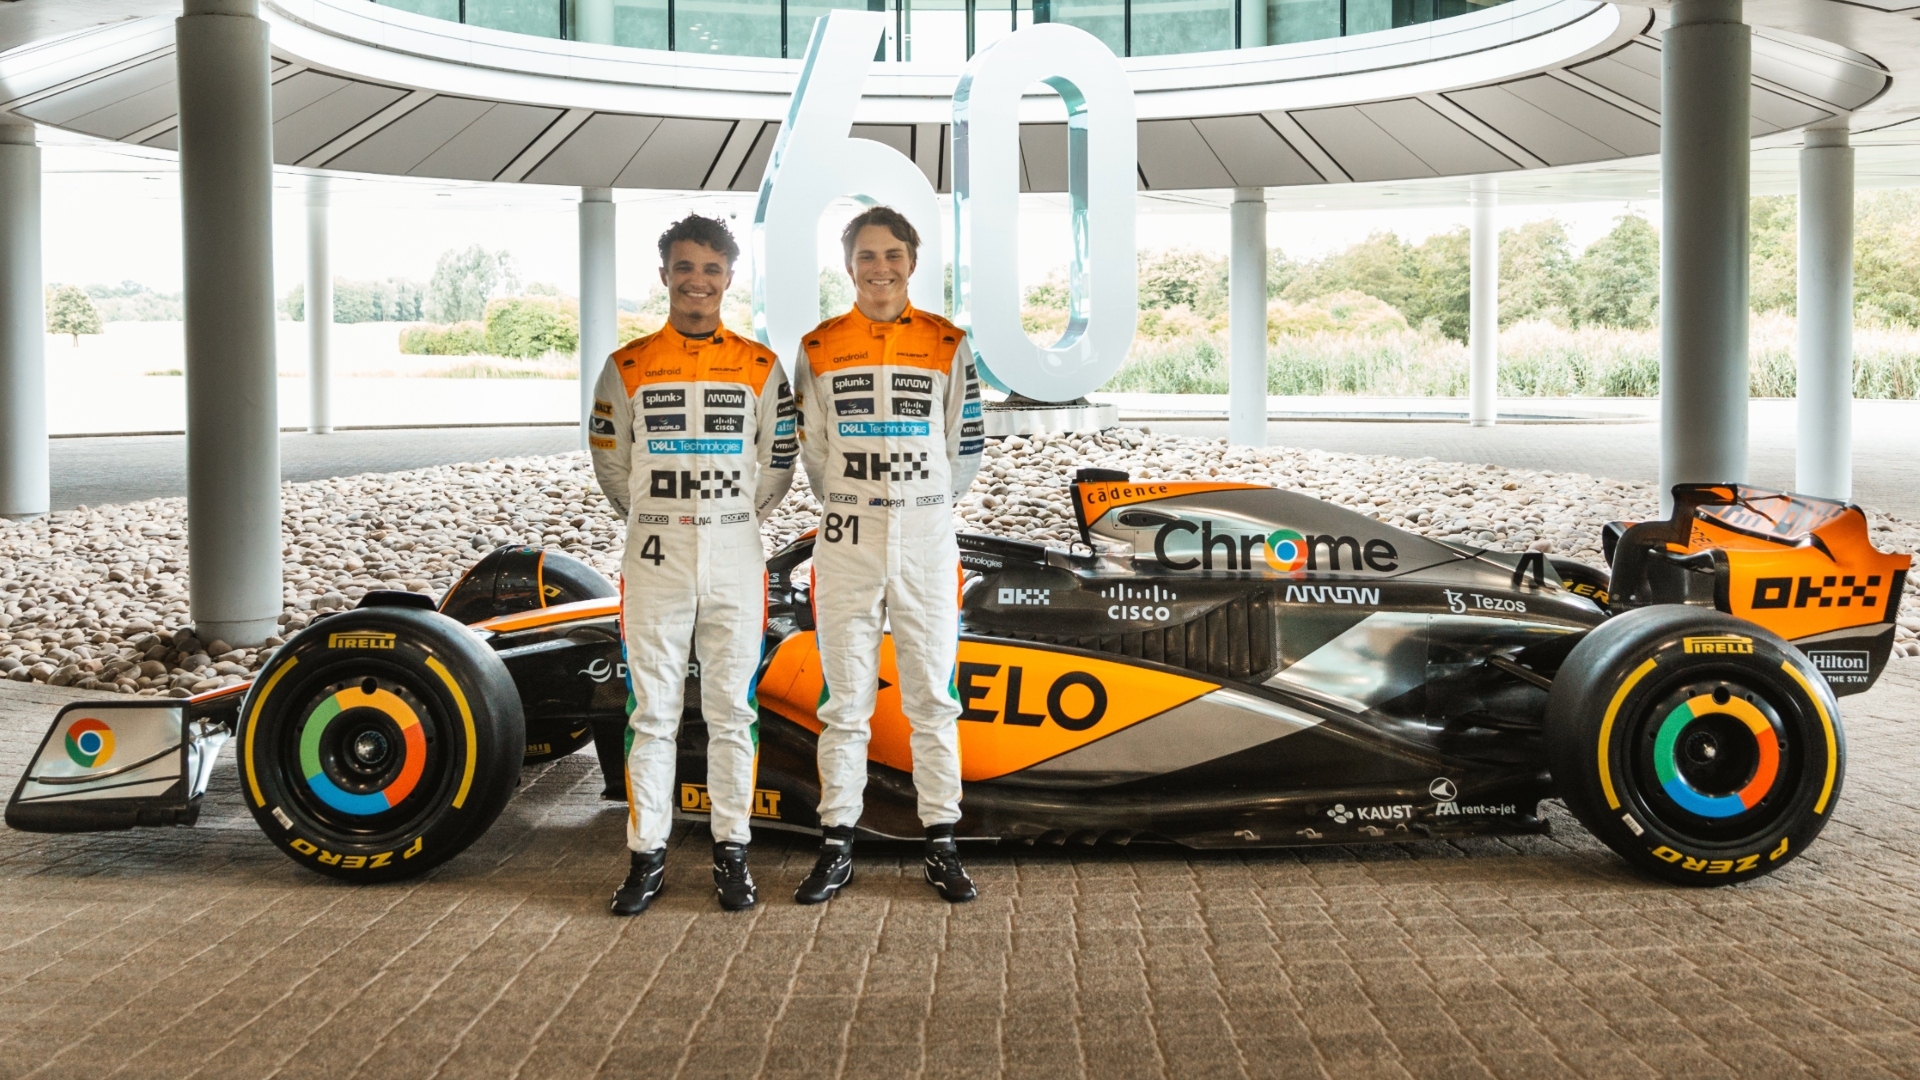 McLaren unveil throwback chrome livery ahead of British GP - Stream the Video